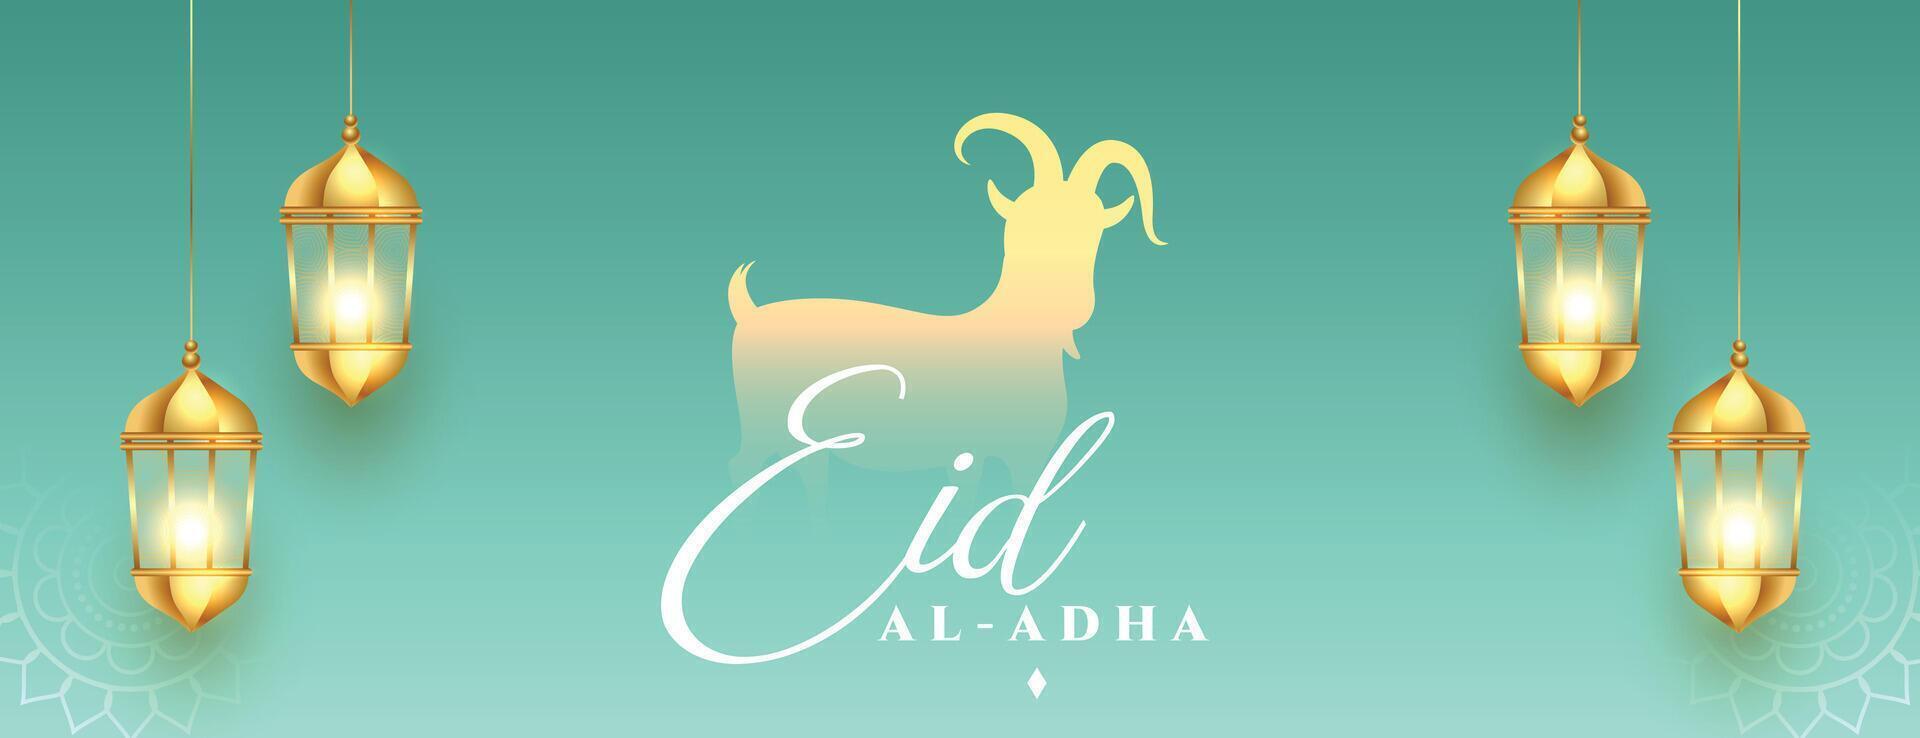 eid al adha mubarak festival banner with lantern and goat vector